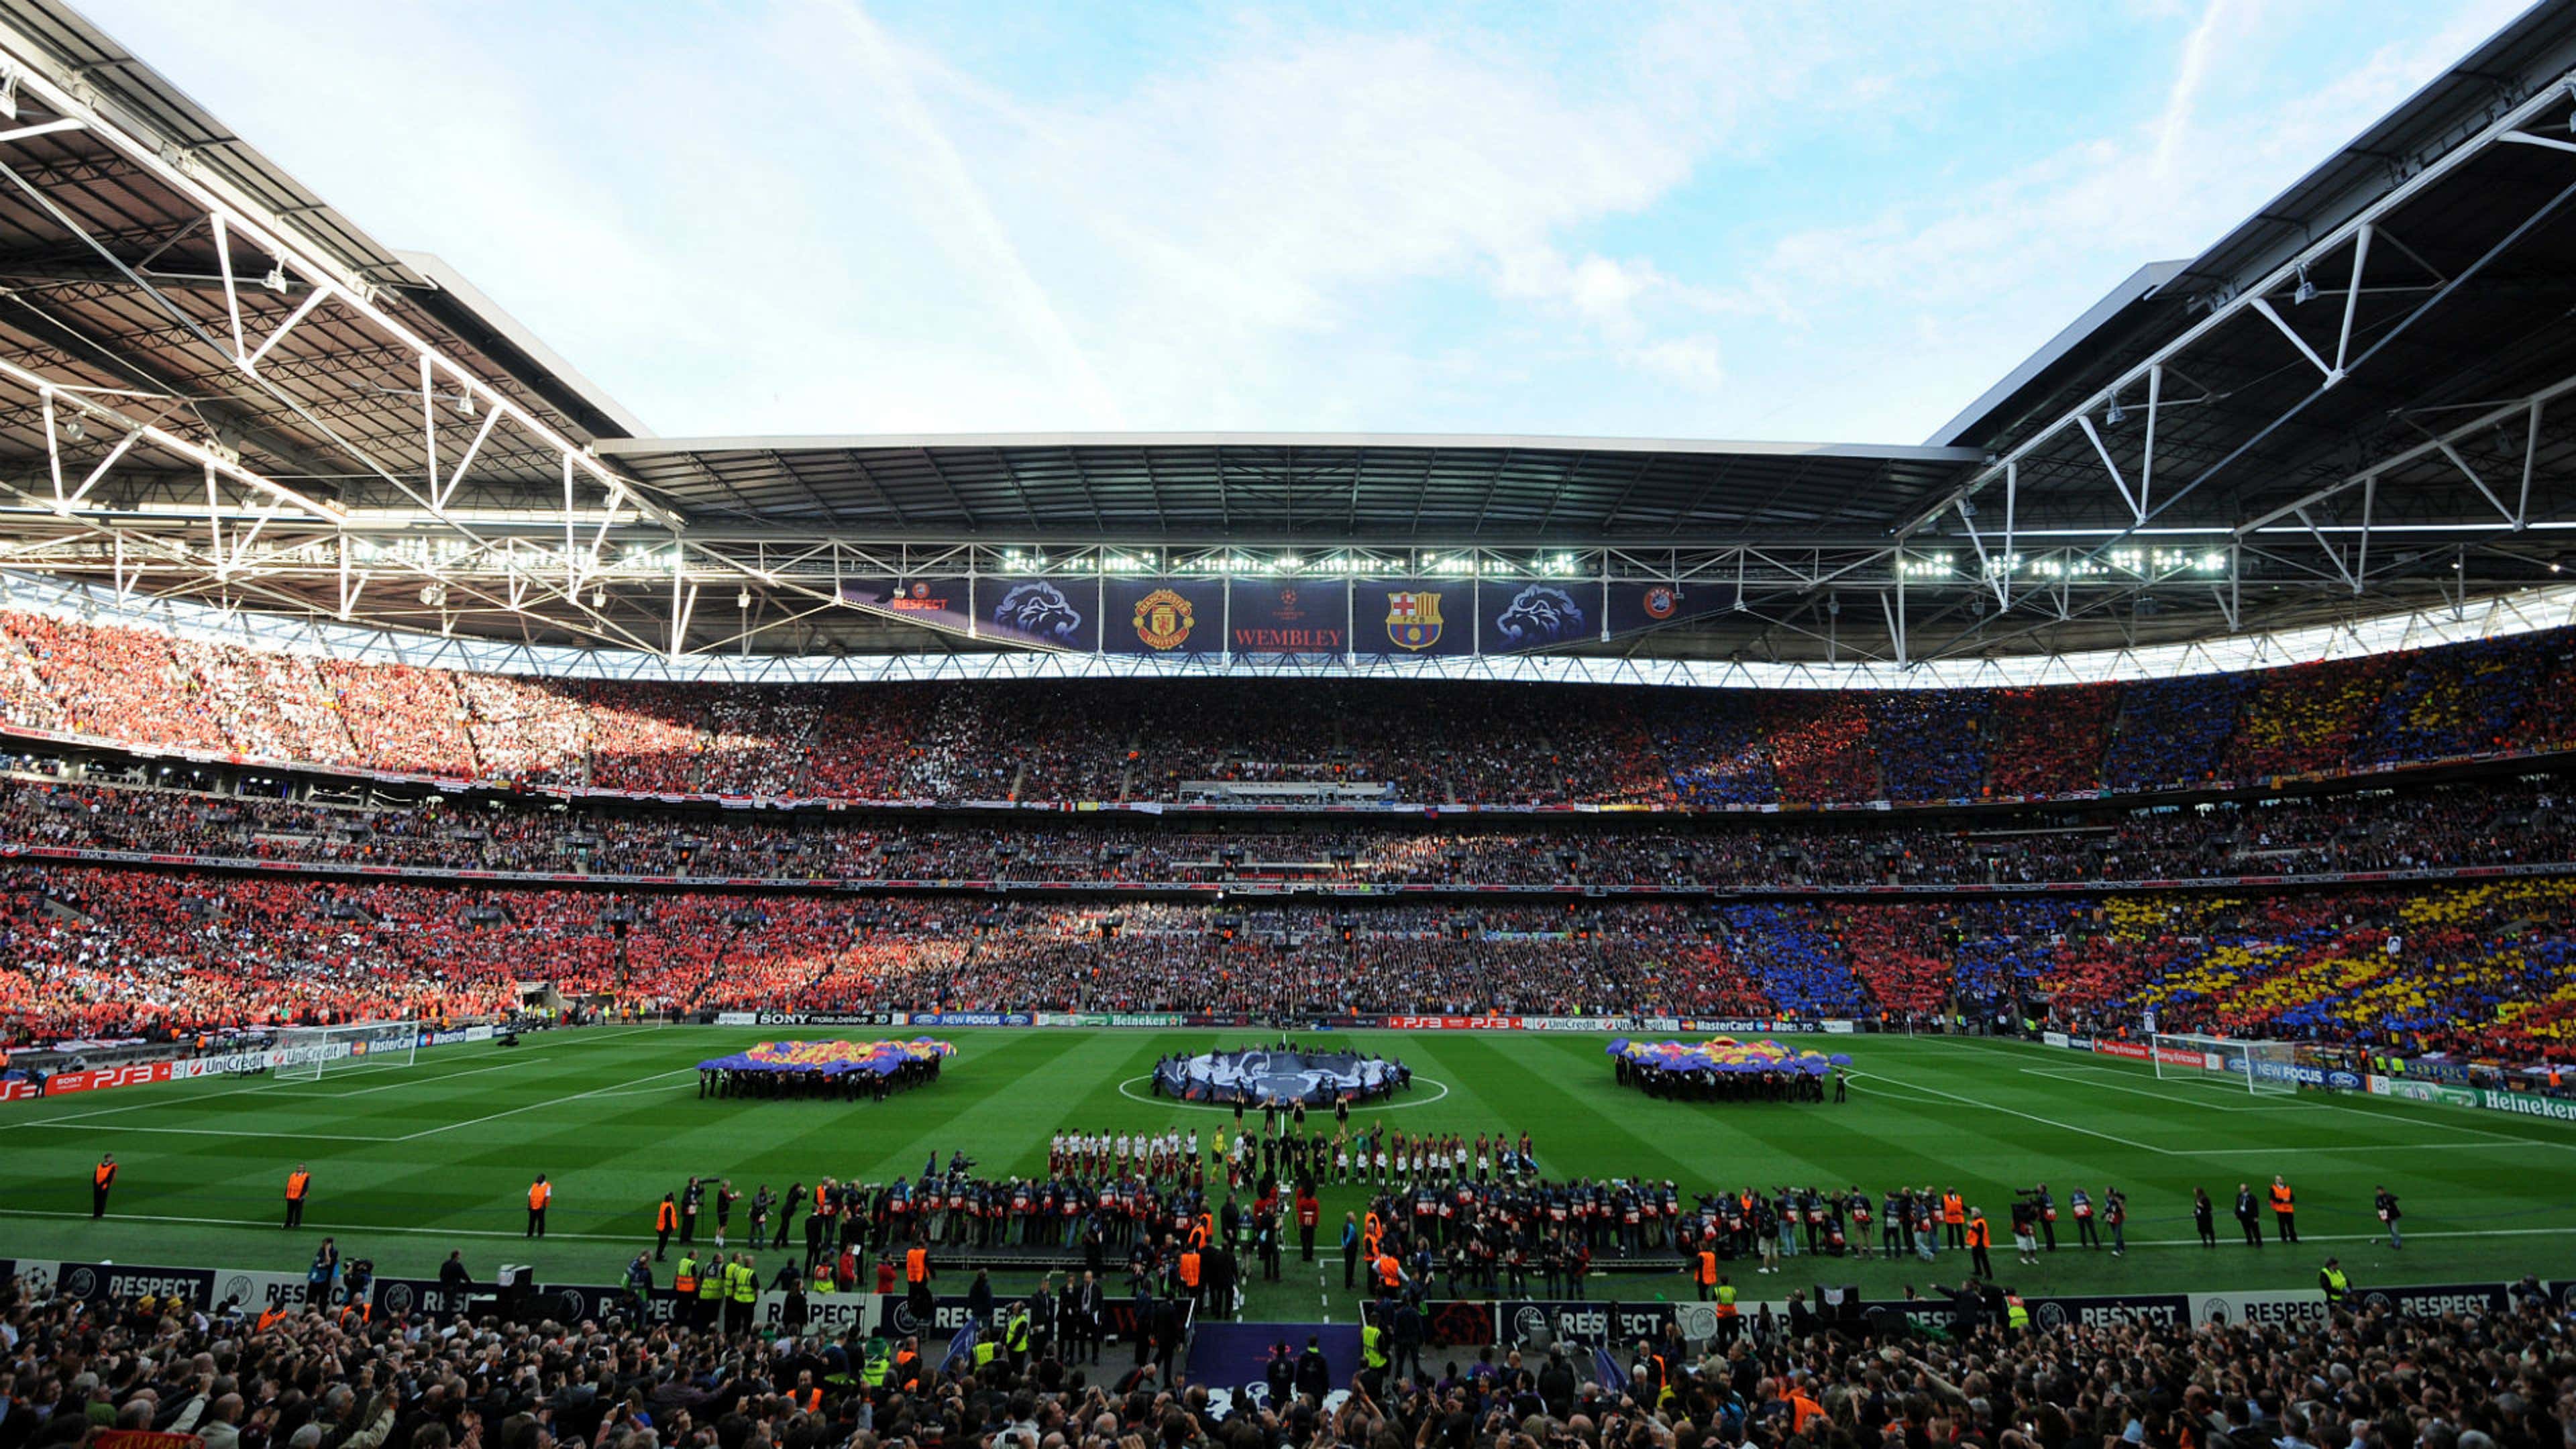 Wembley general view